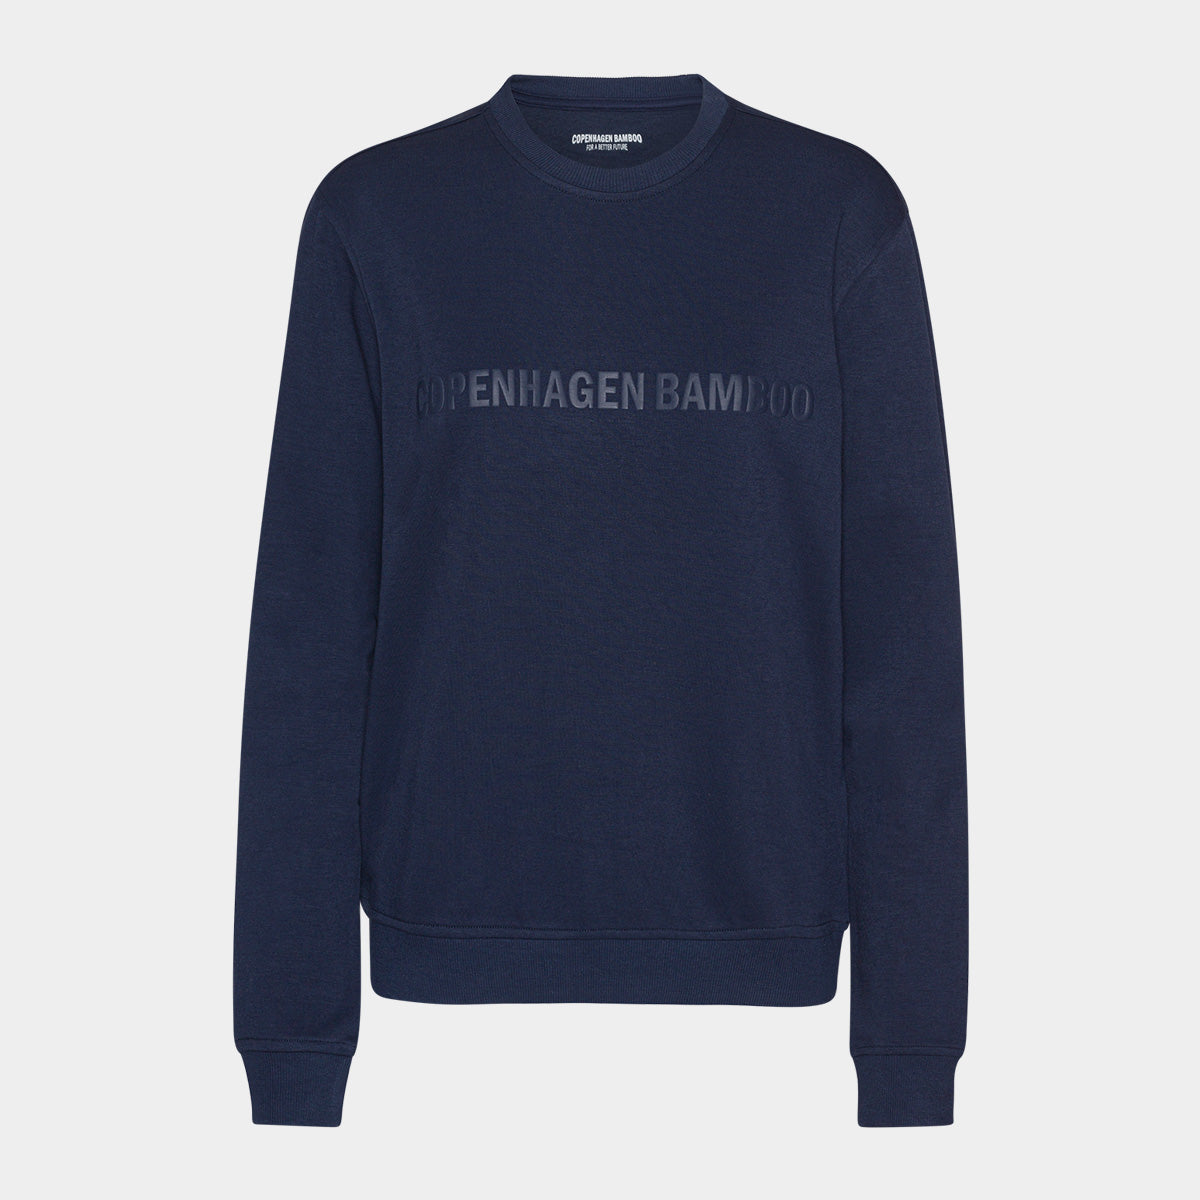 Se Navy bambus sweatshirt til mænd med logo fra Copenhagen Bamboo, XL hos Bambustøj.dk